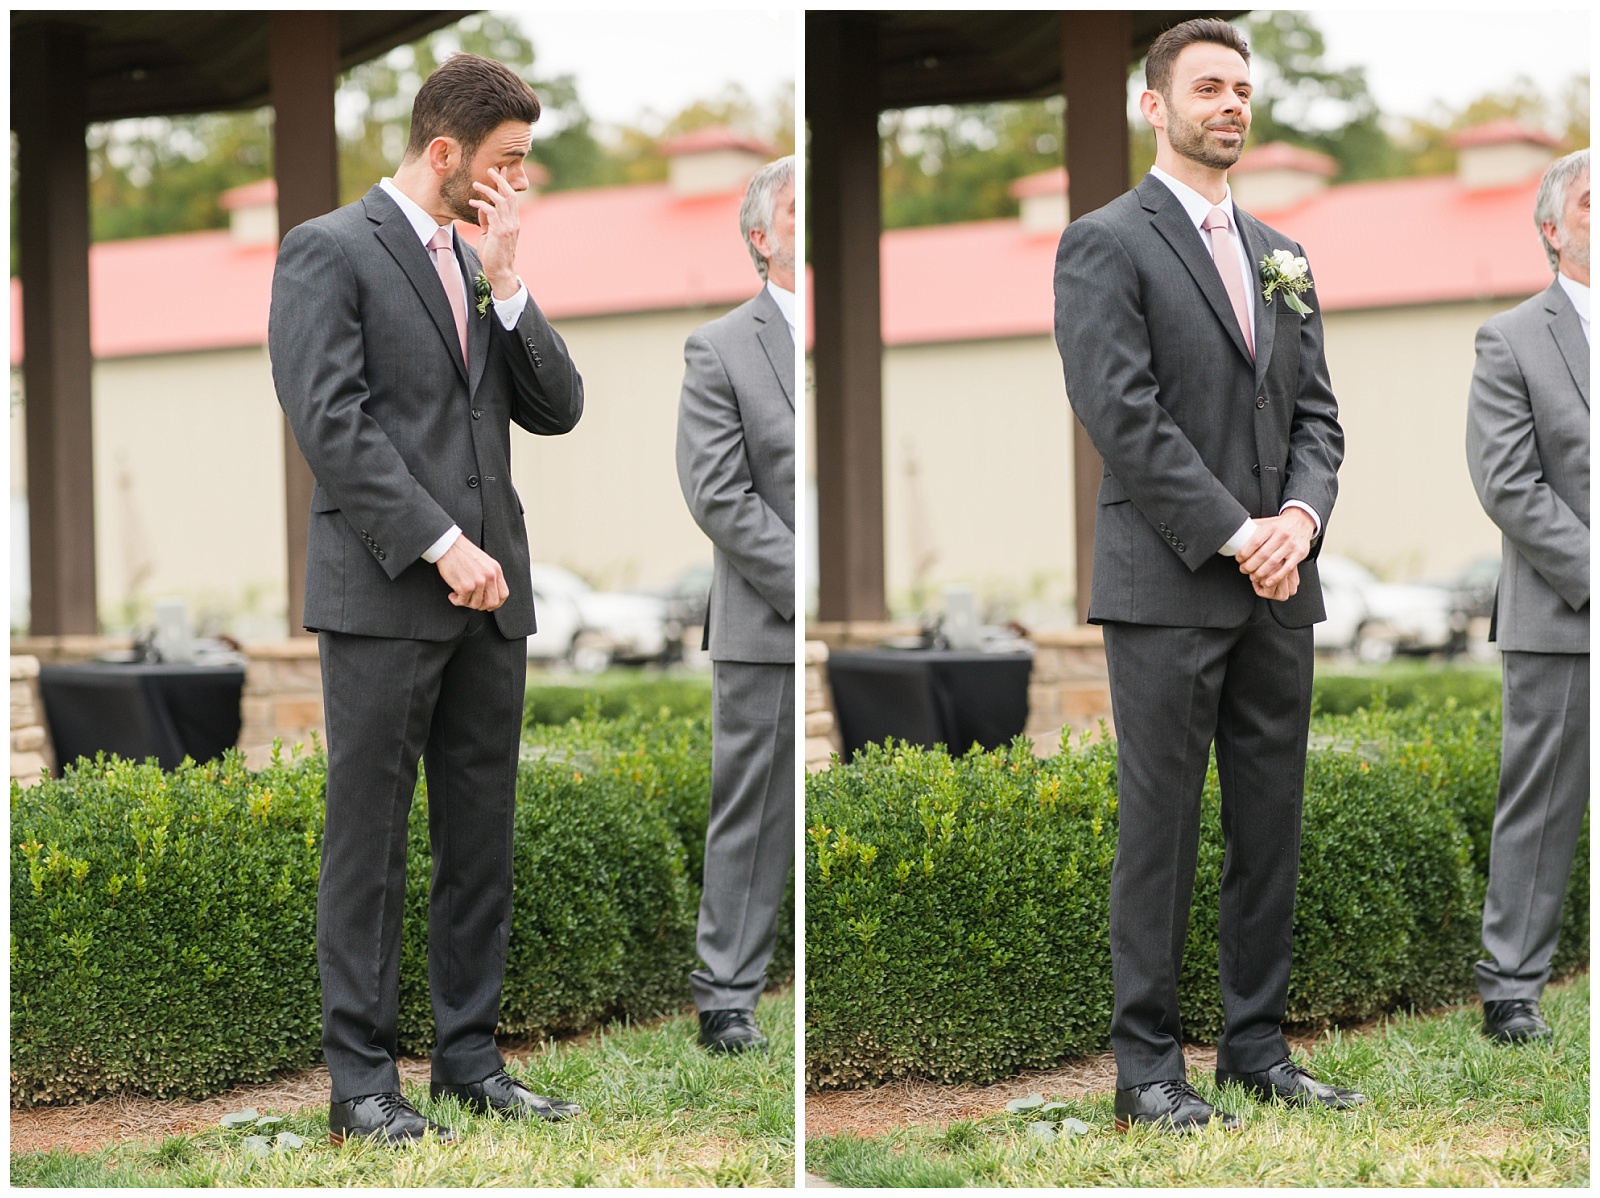 groom's emotional reaction to seeing bride on their wedding day. Photo taken by jenn eddine photography, a greensboro north carolina wedding photographer